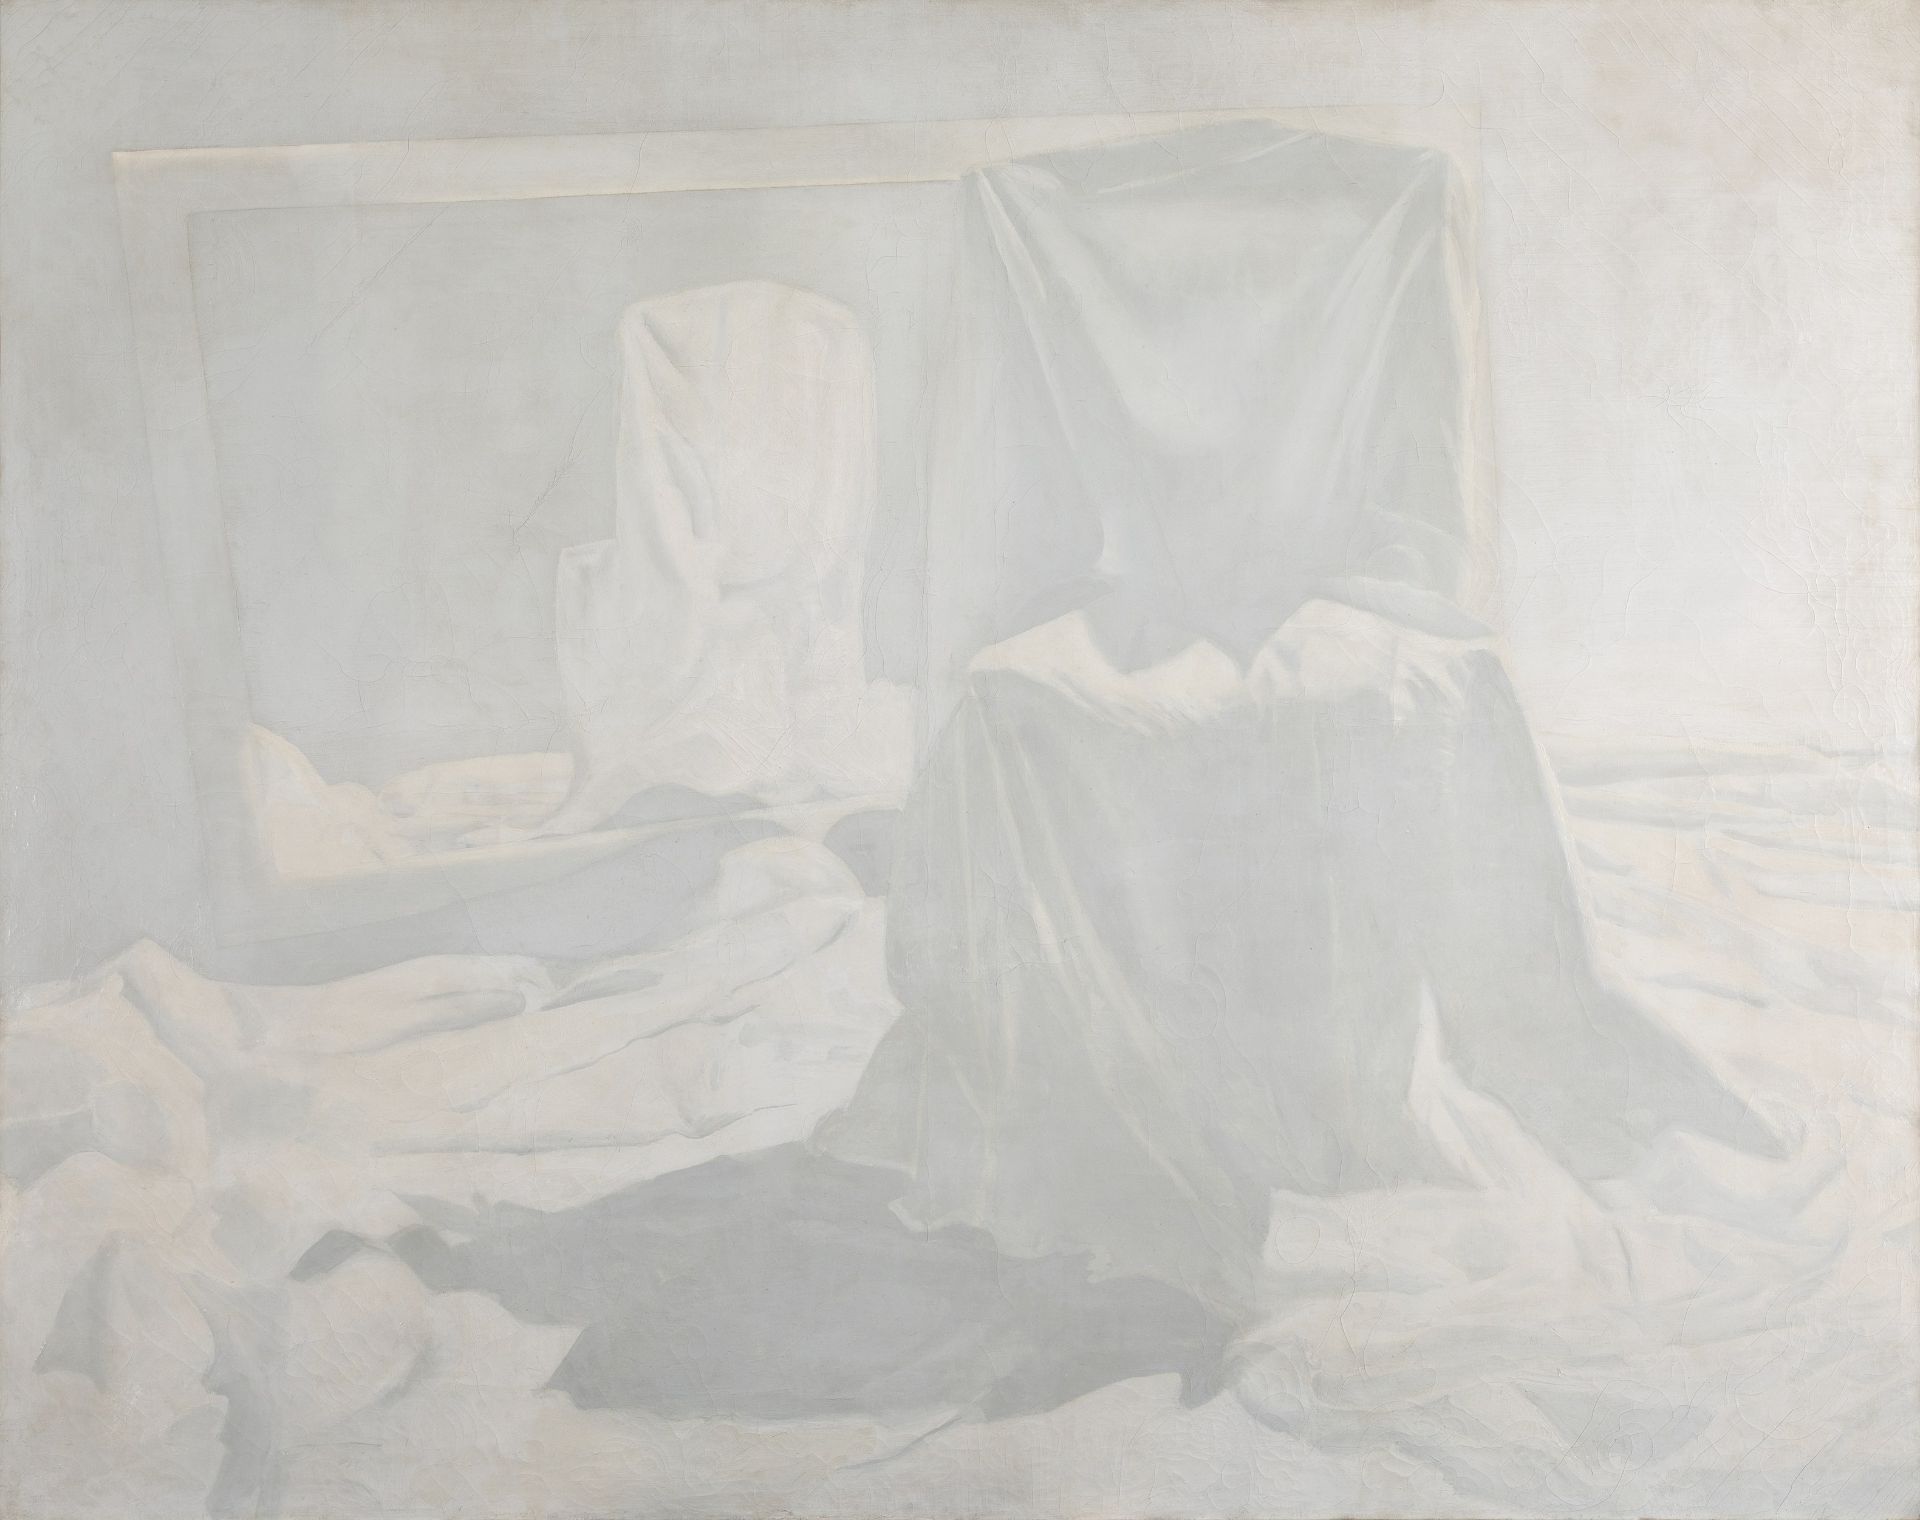 MARINA KARELLA (born 1940) Reflection d'une chaise